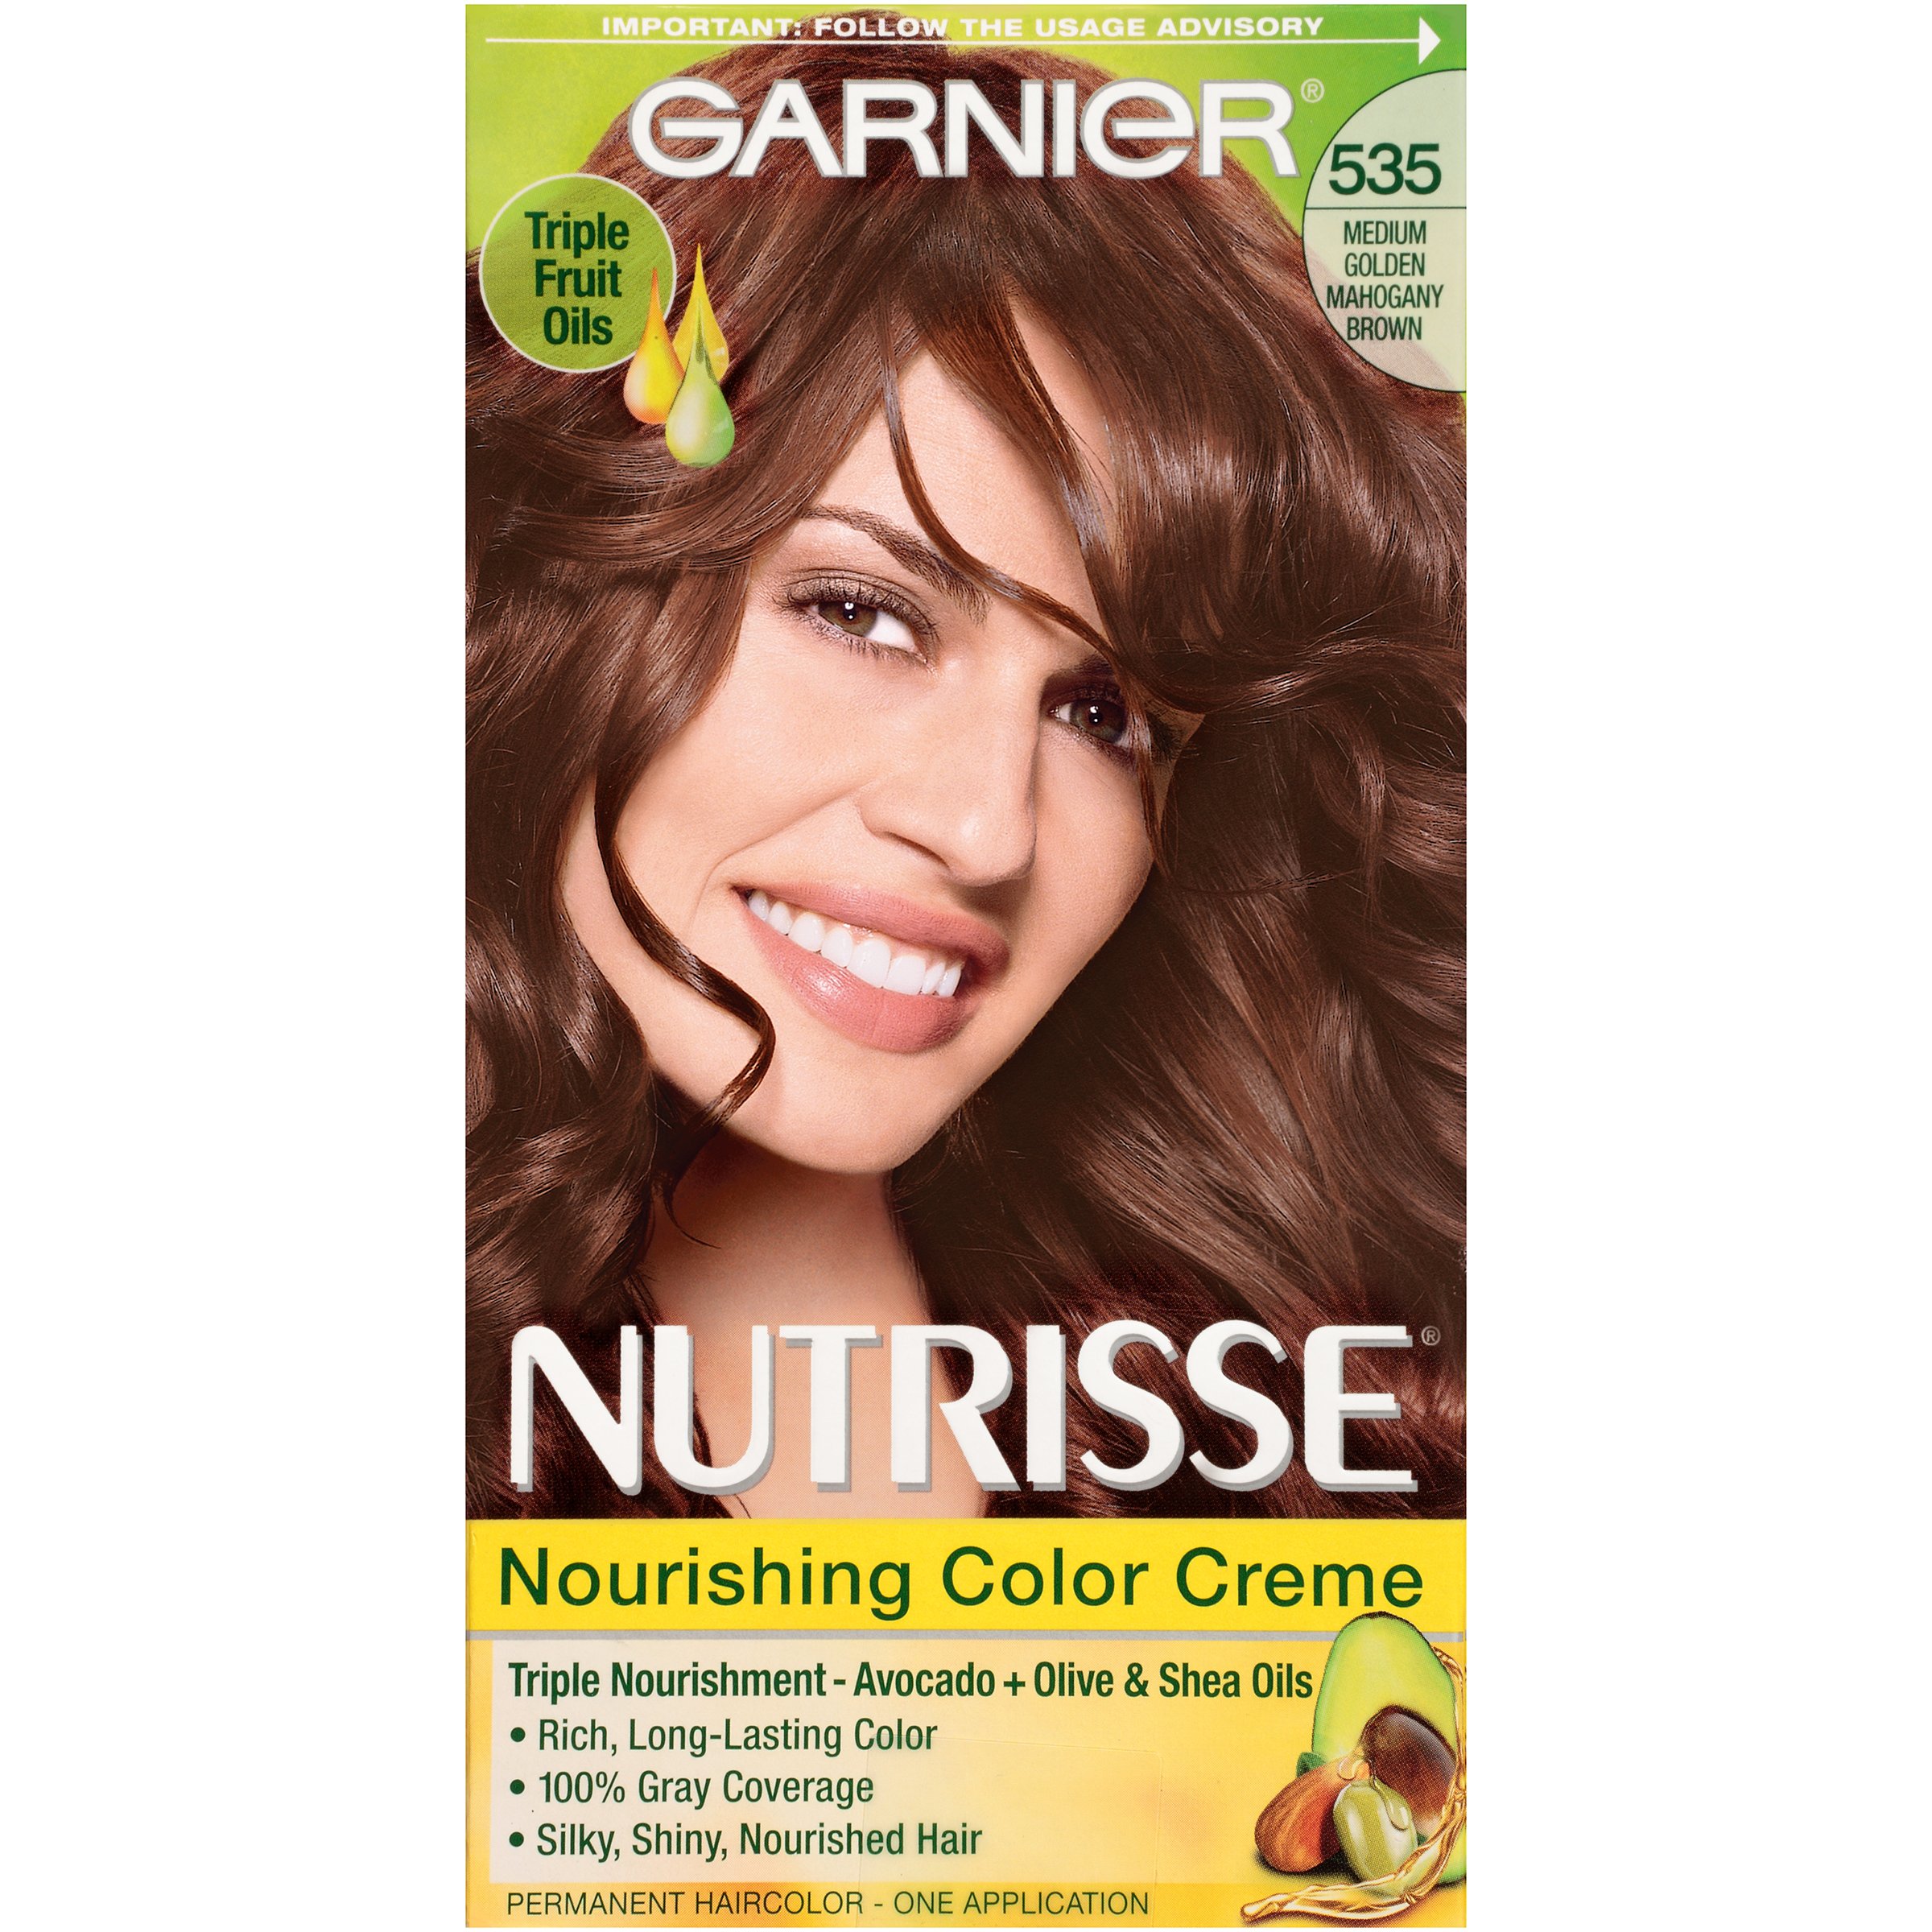 garnier dark brown hair color review